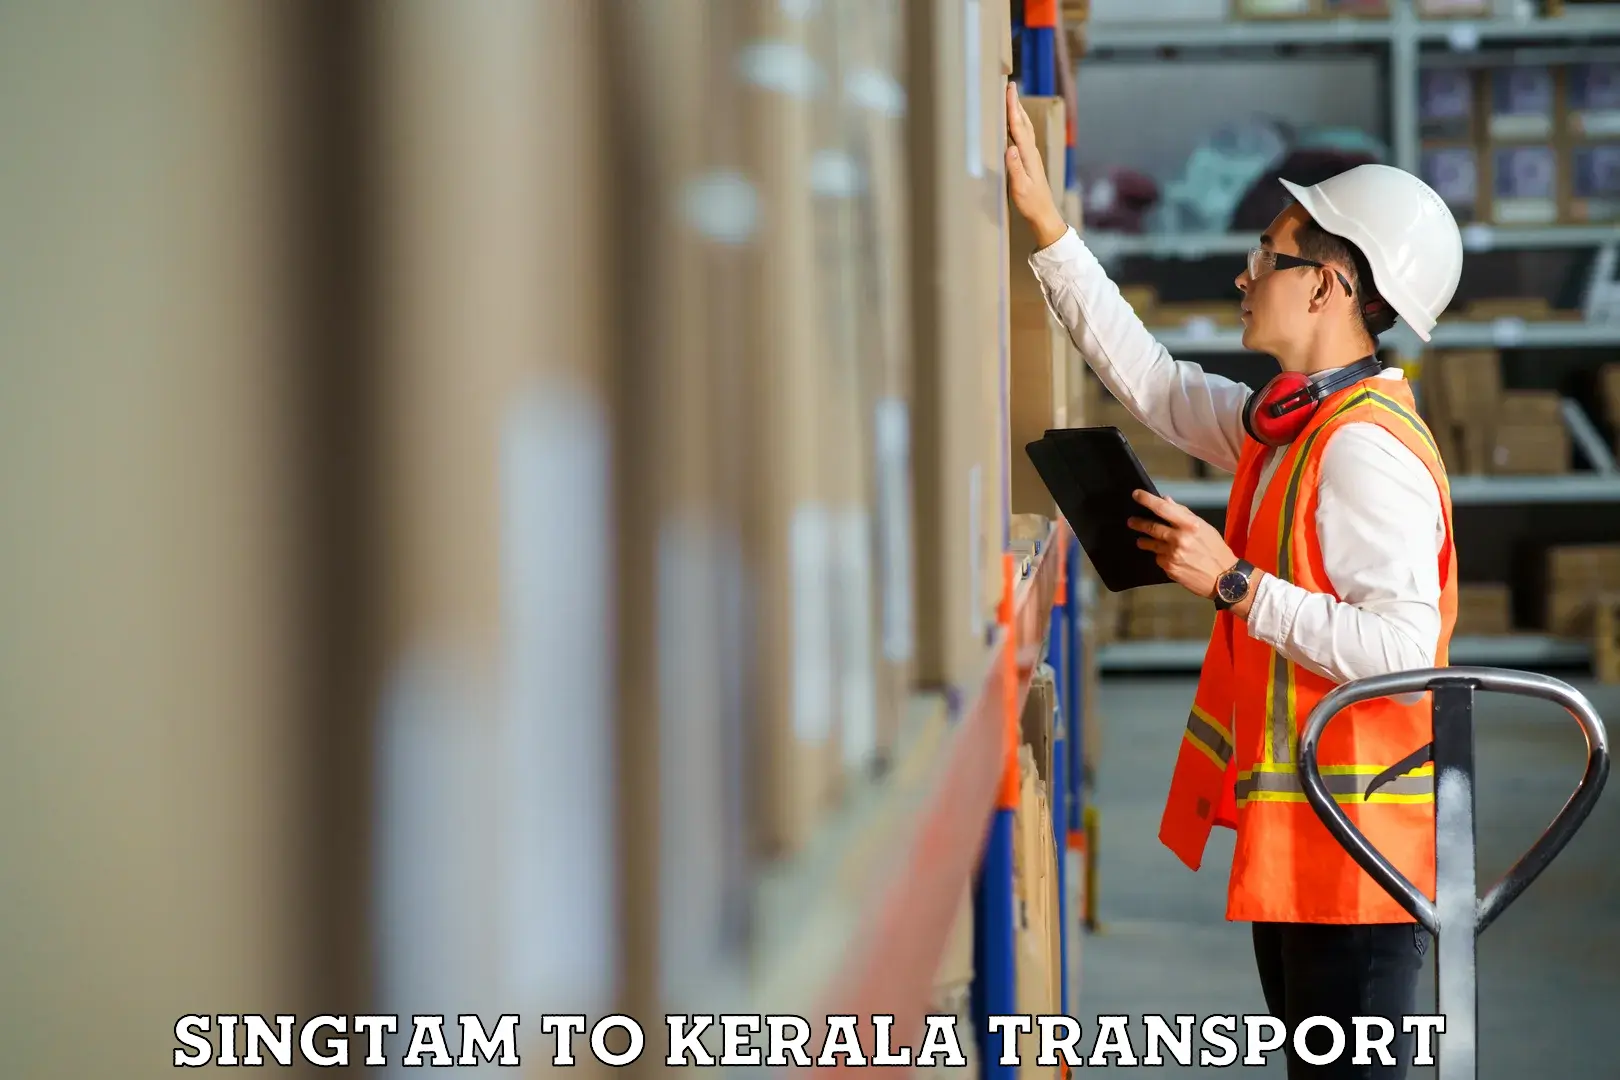 Transport in sharing Singtam to Kerala